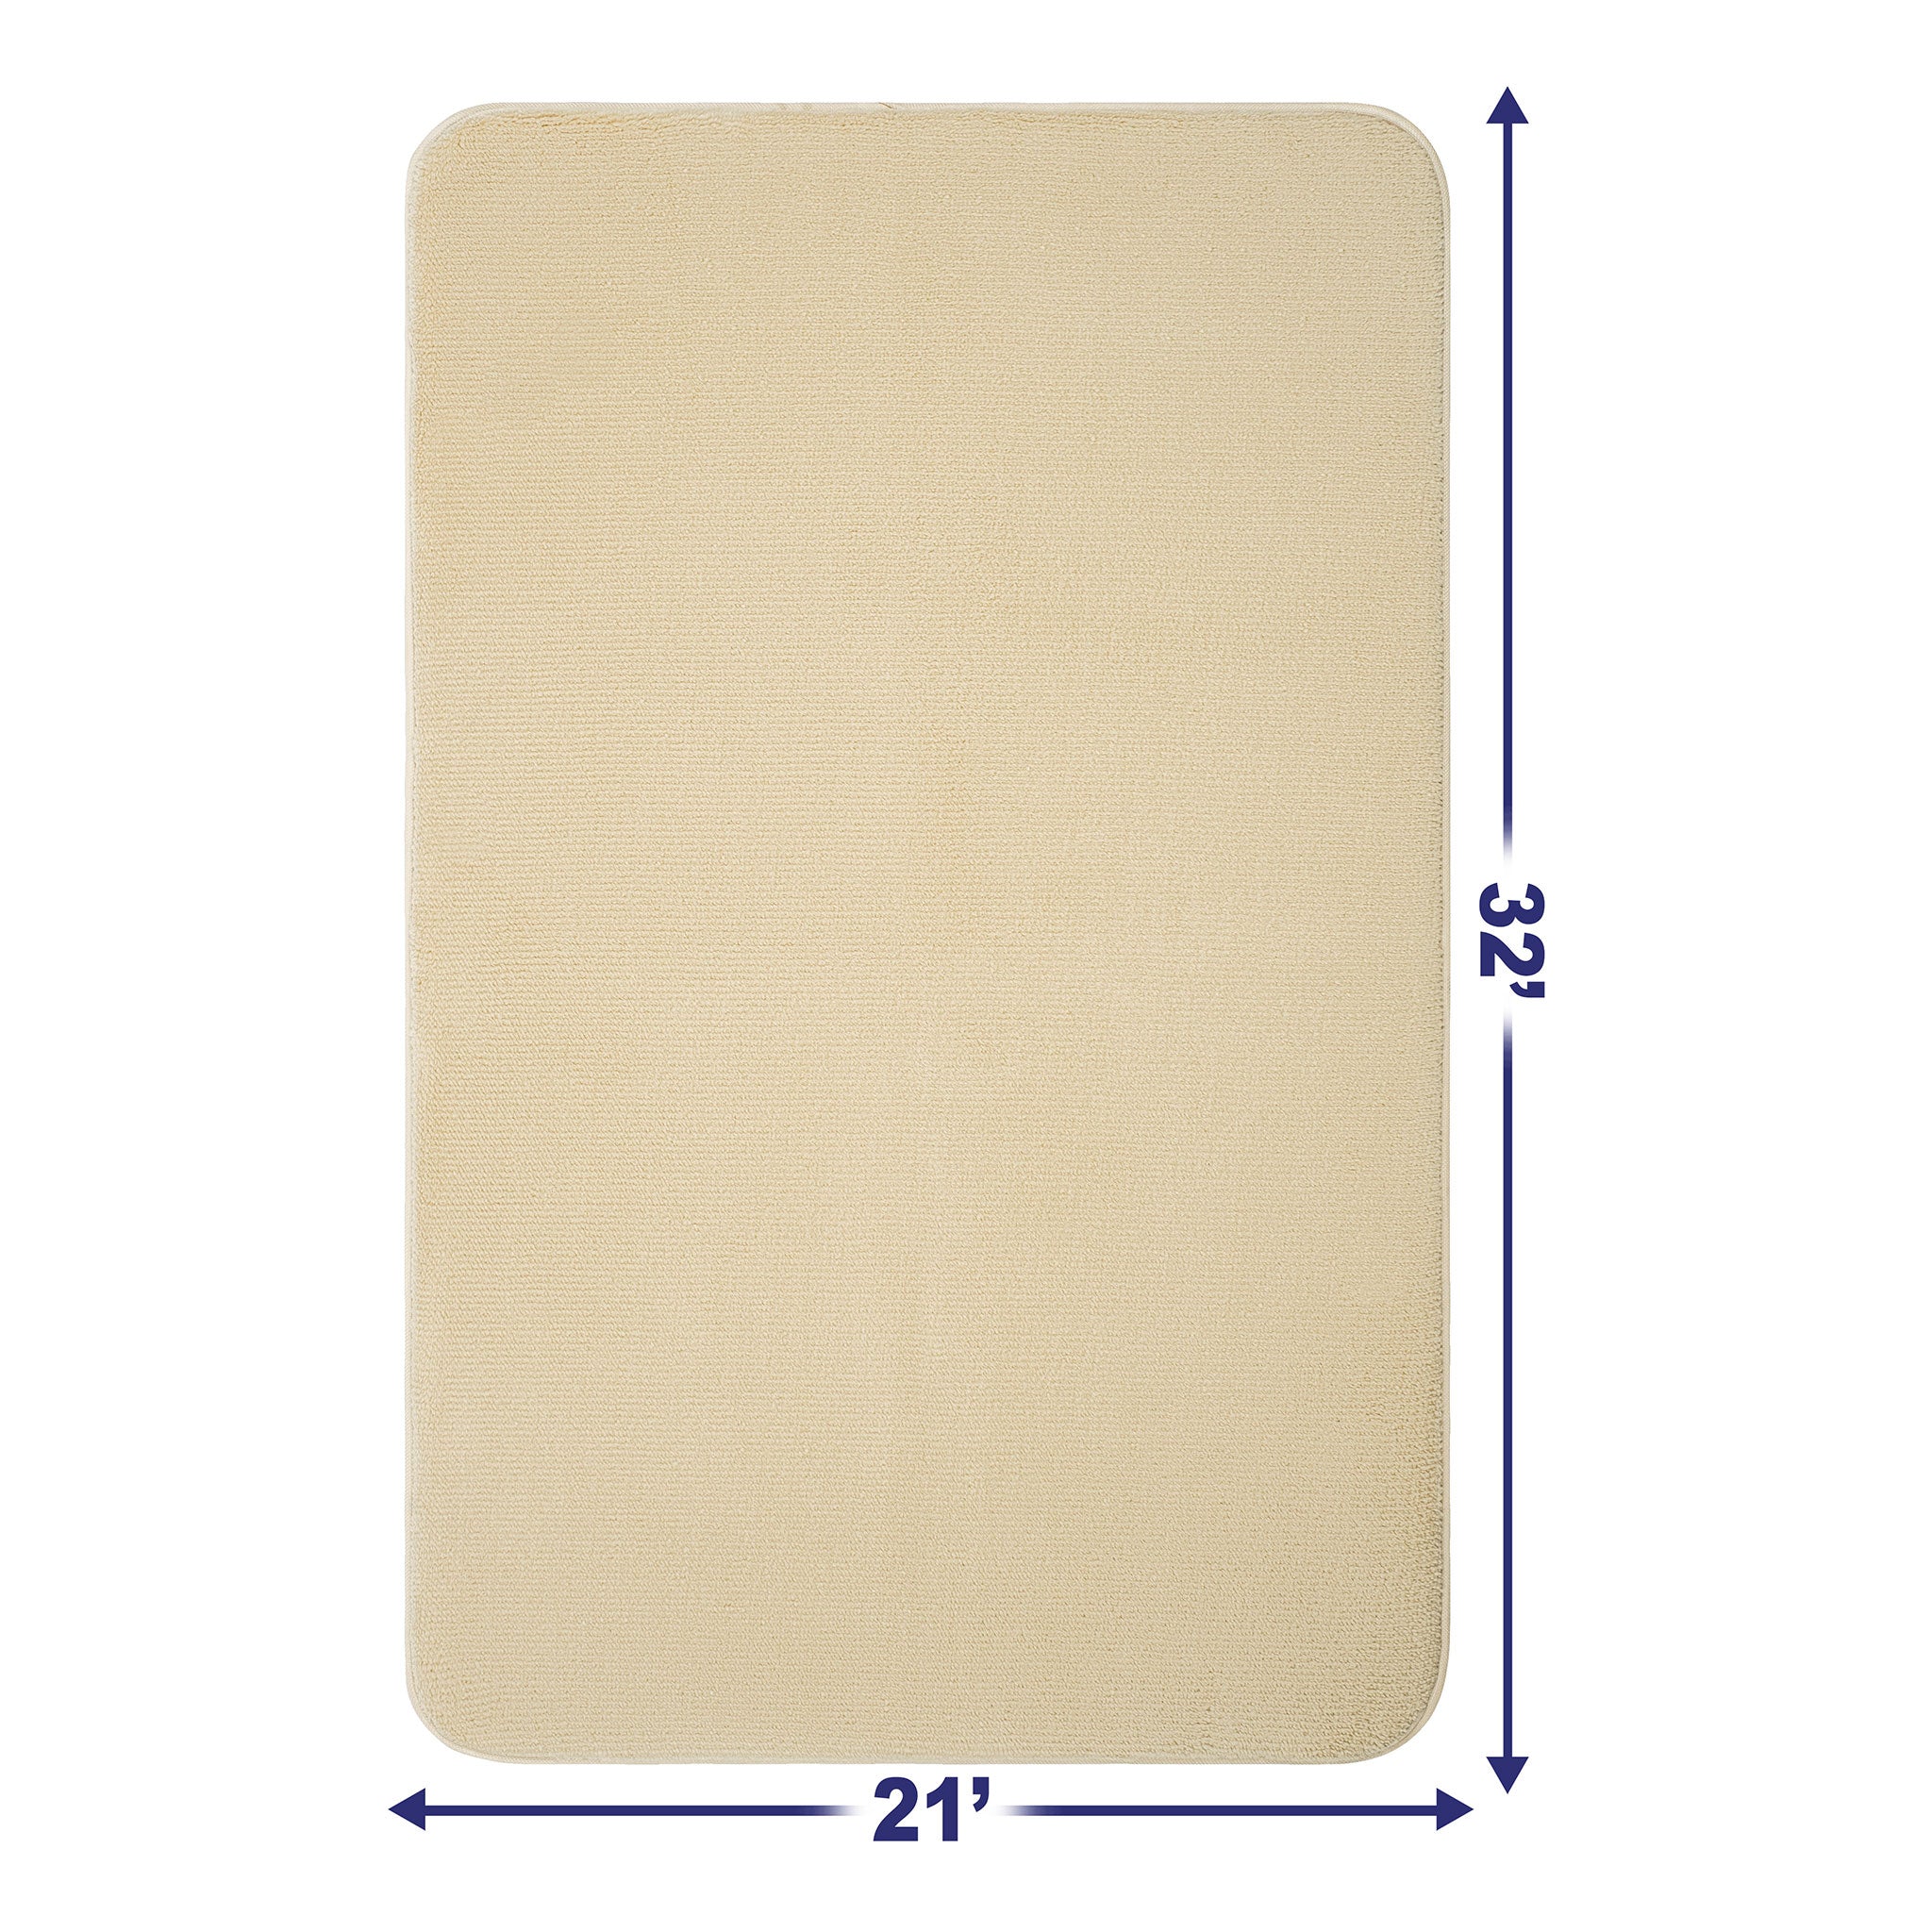 American Soft Linen, Fluffy Foamed Non-Slip Bath Rug 21x32 inch Bath Mat Rug - Sand Taupe